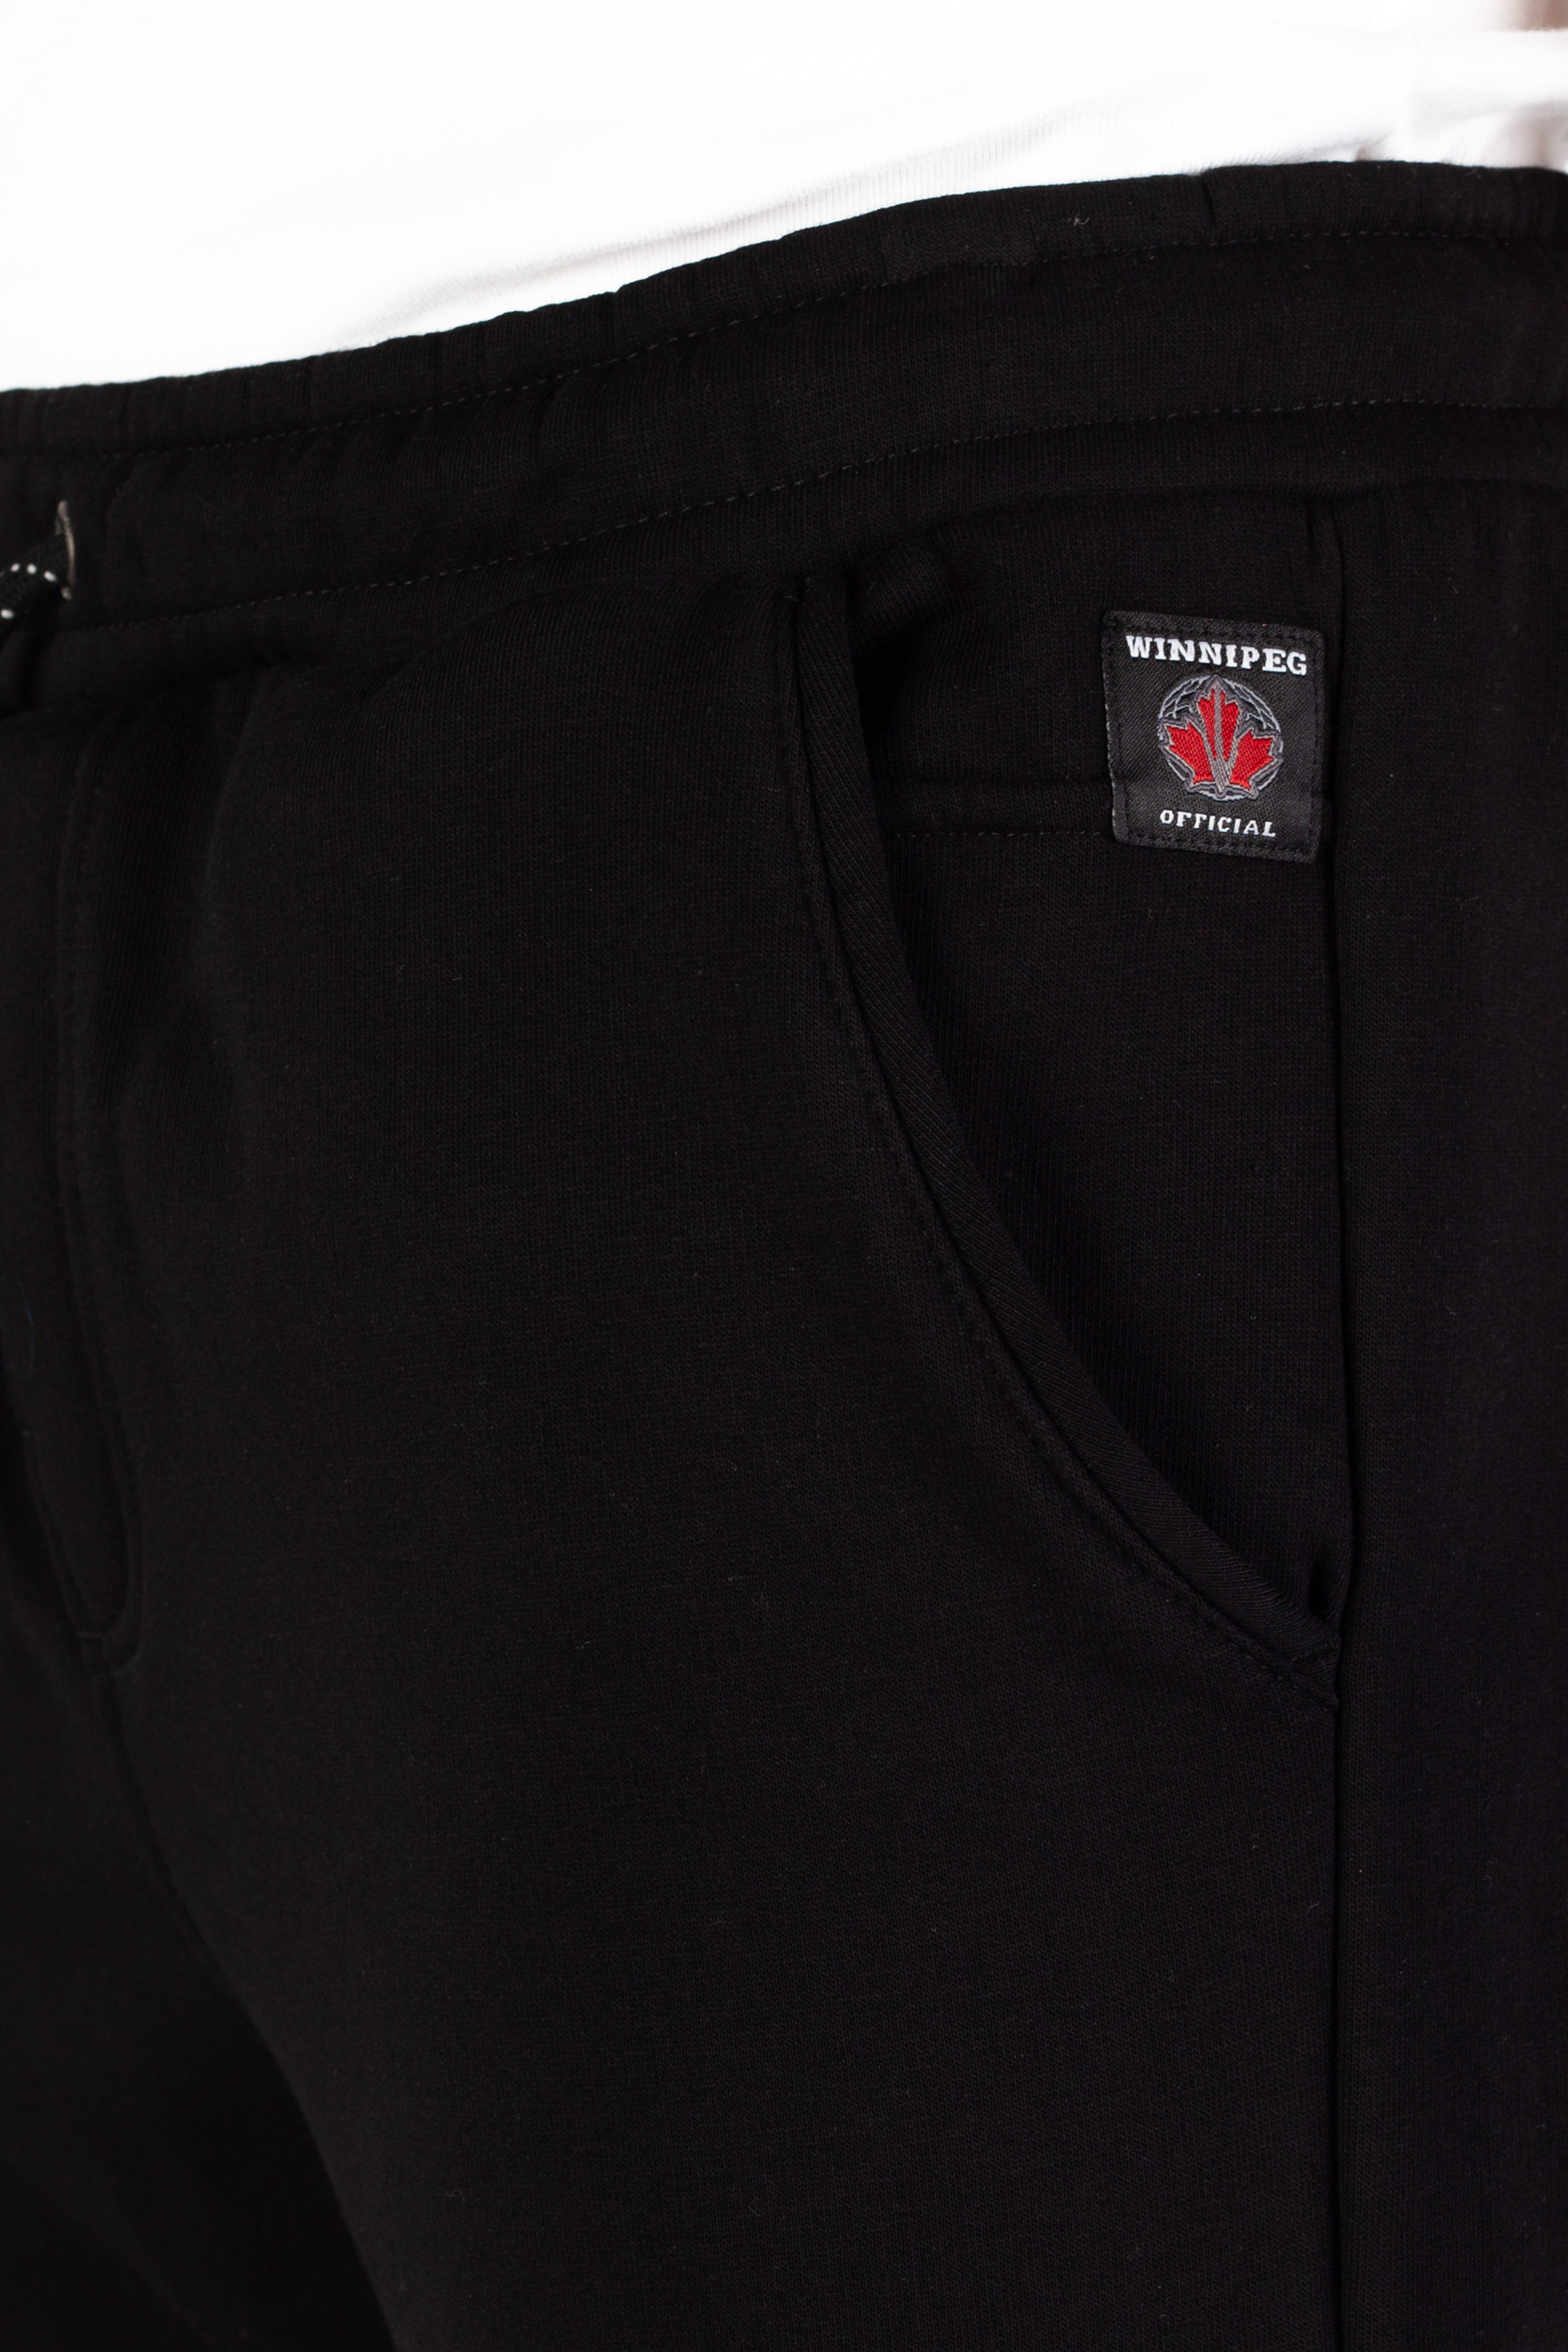 Спортивные штаны WINNIPEG PEAK-BLACK